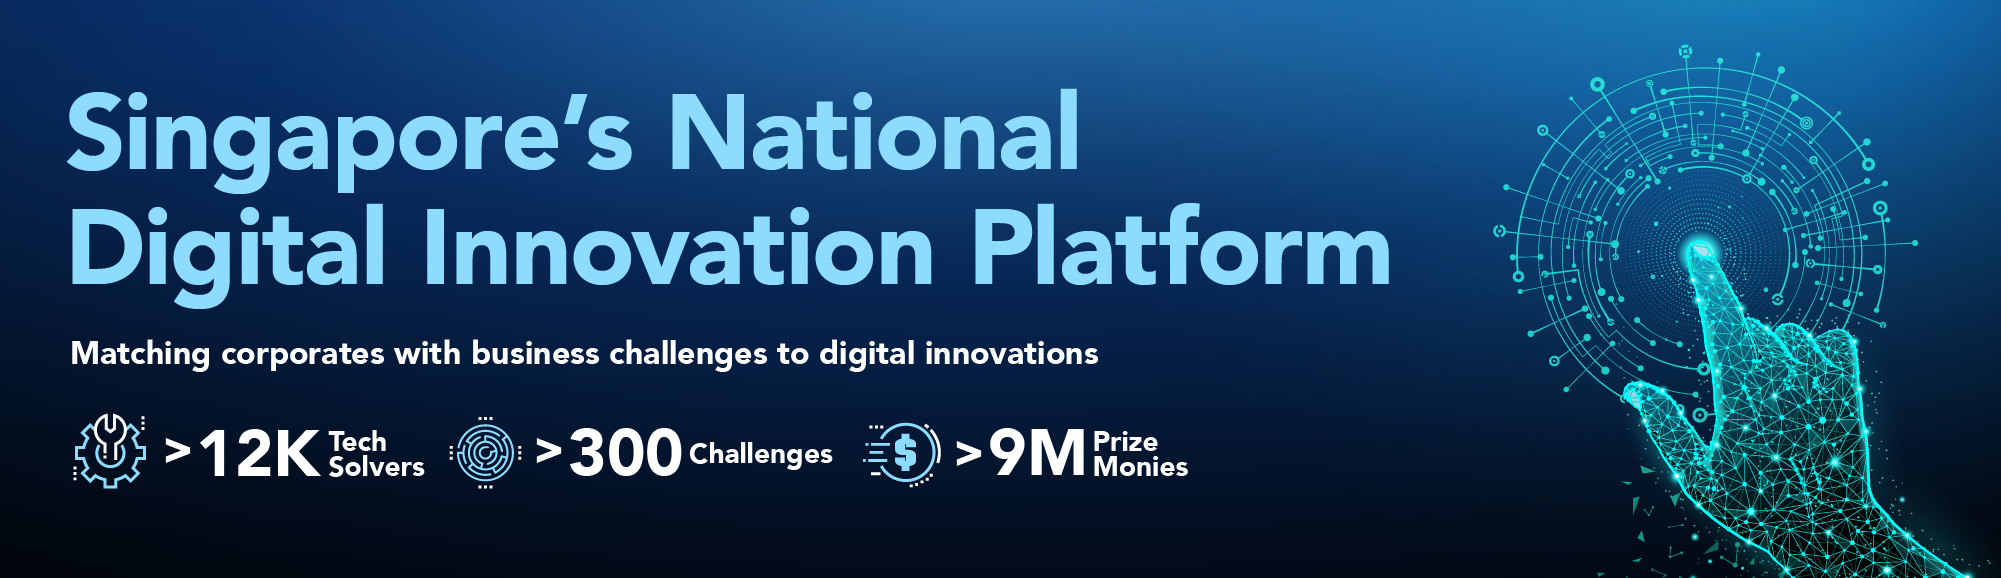 Open Innovation Platform - Singapore's National Digital Innovation Platform